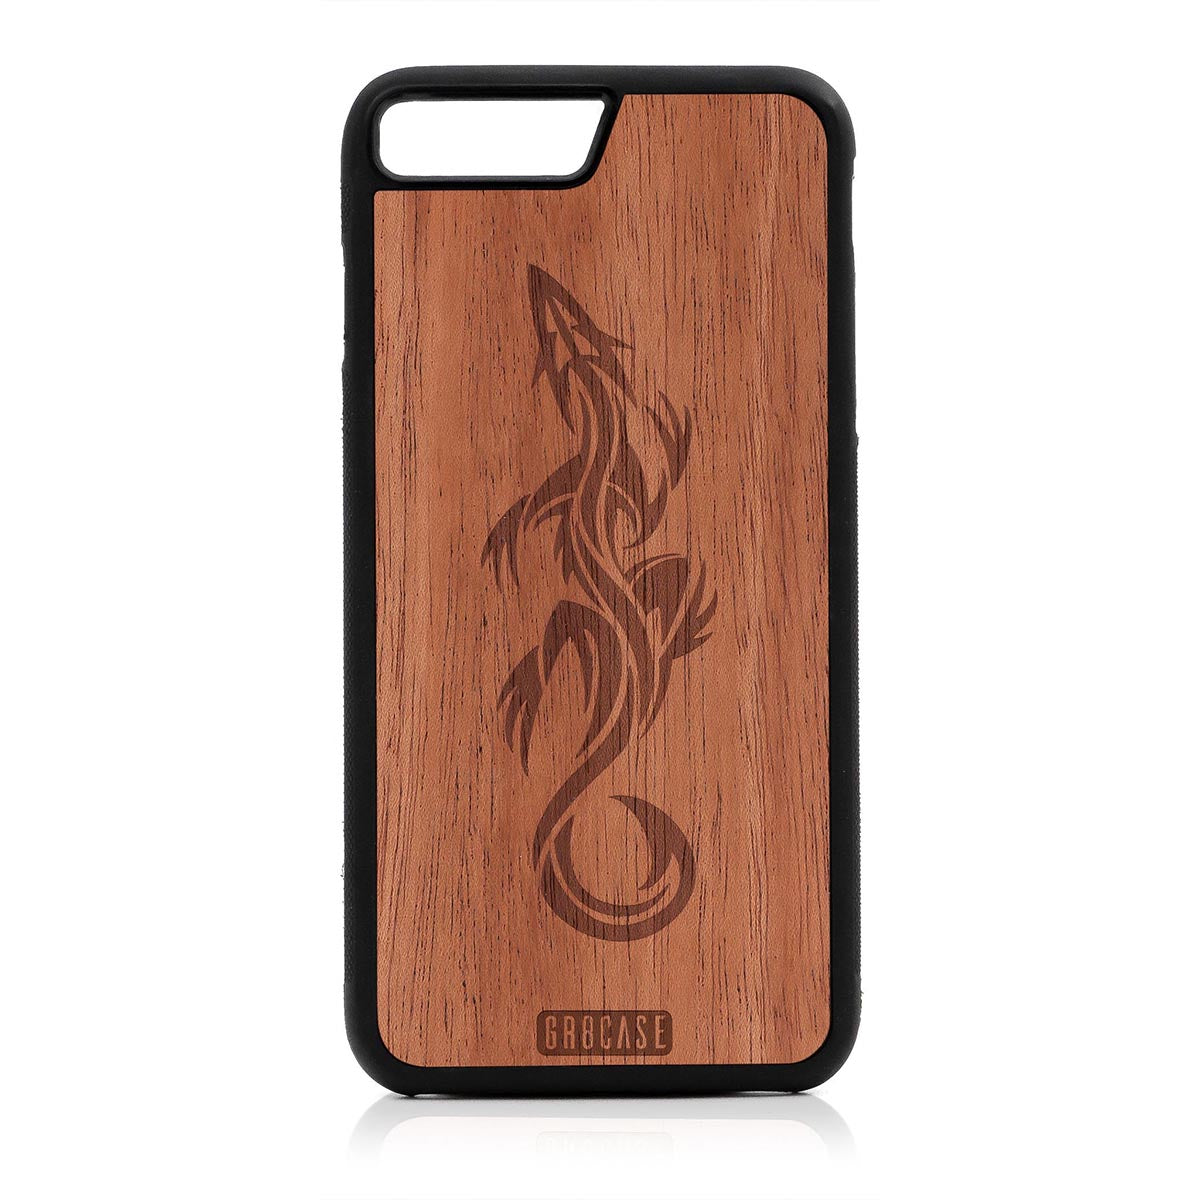 Lizard Design Wood Case For iPhone 7 Plus / 8 Plus by GR8CASE